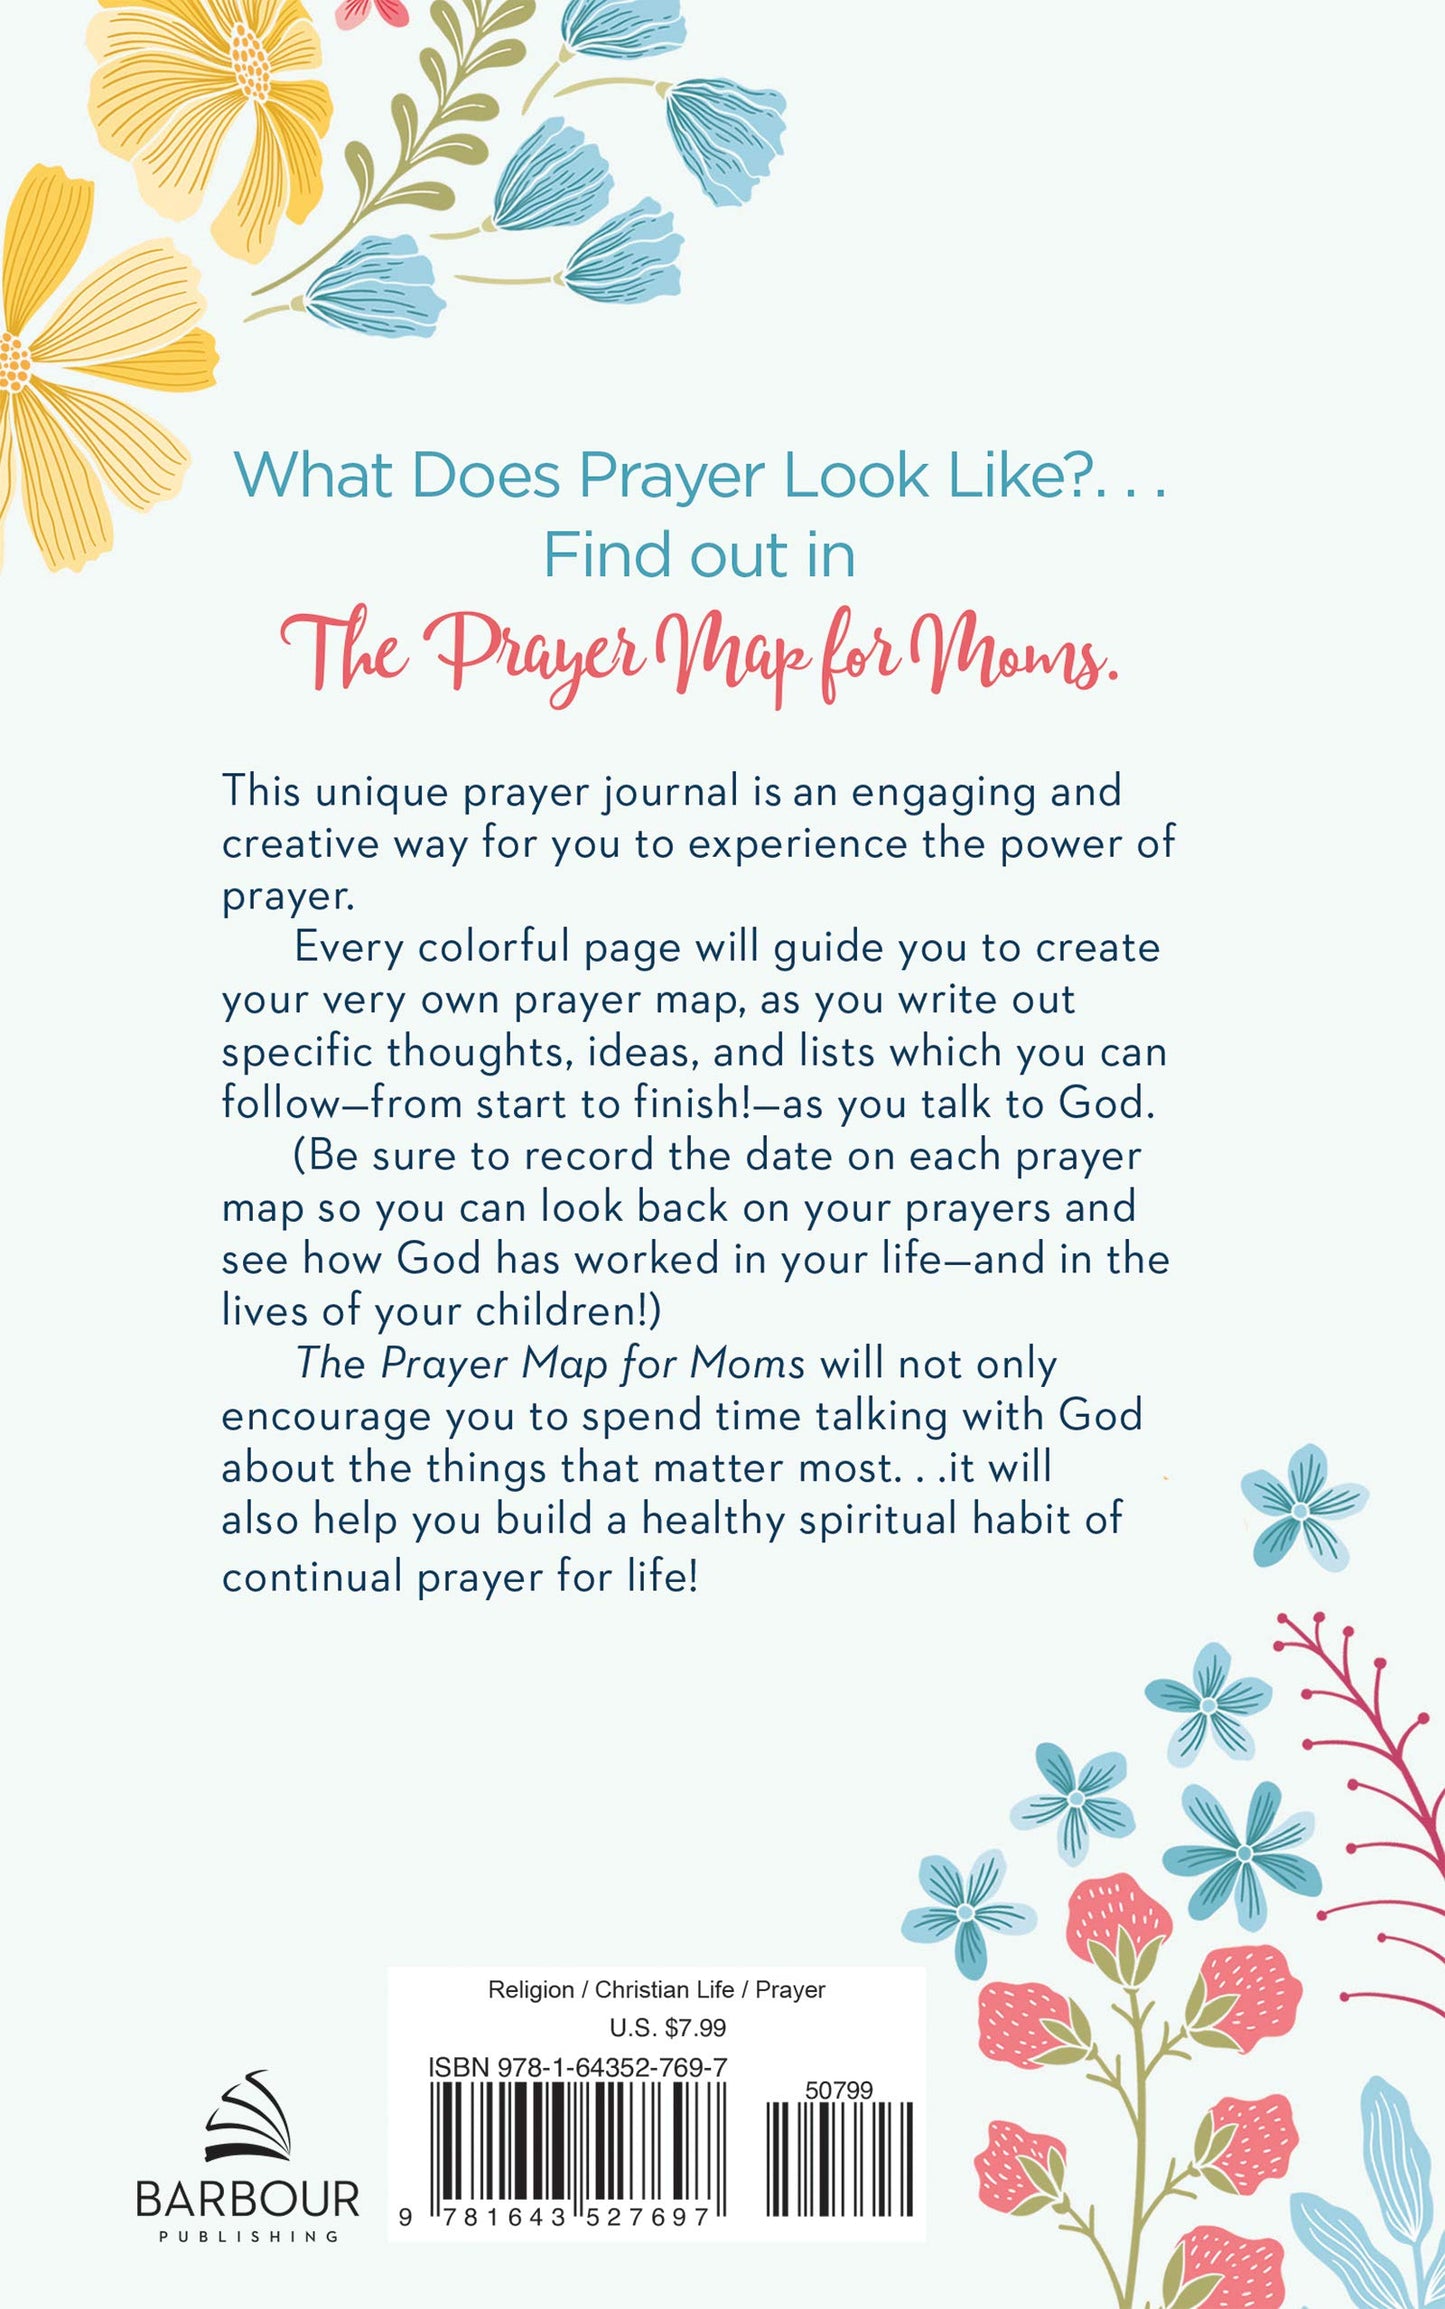 The Prayer Map For Moms